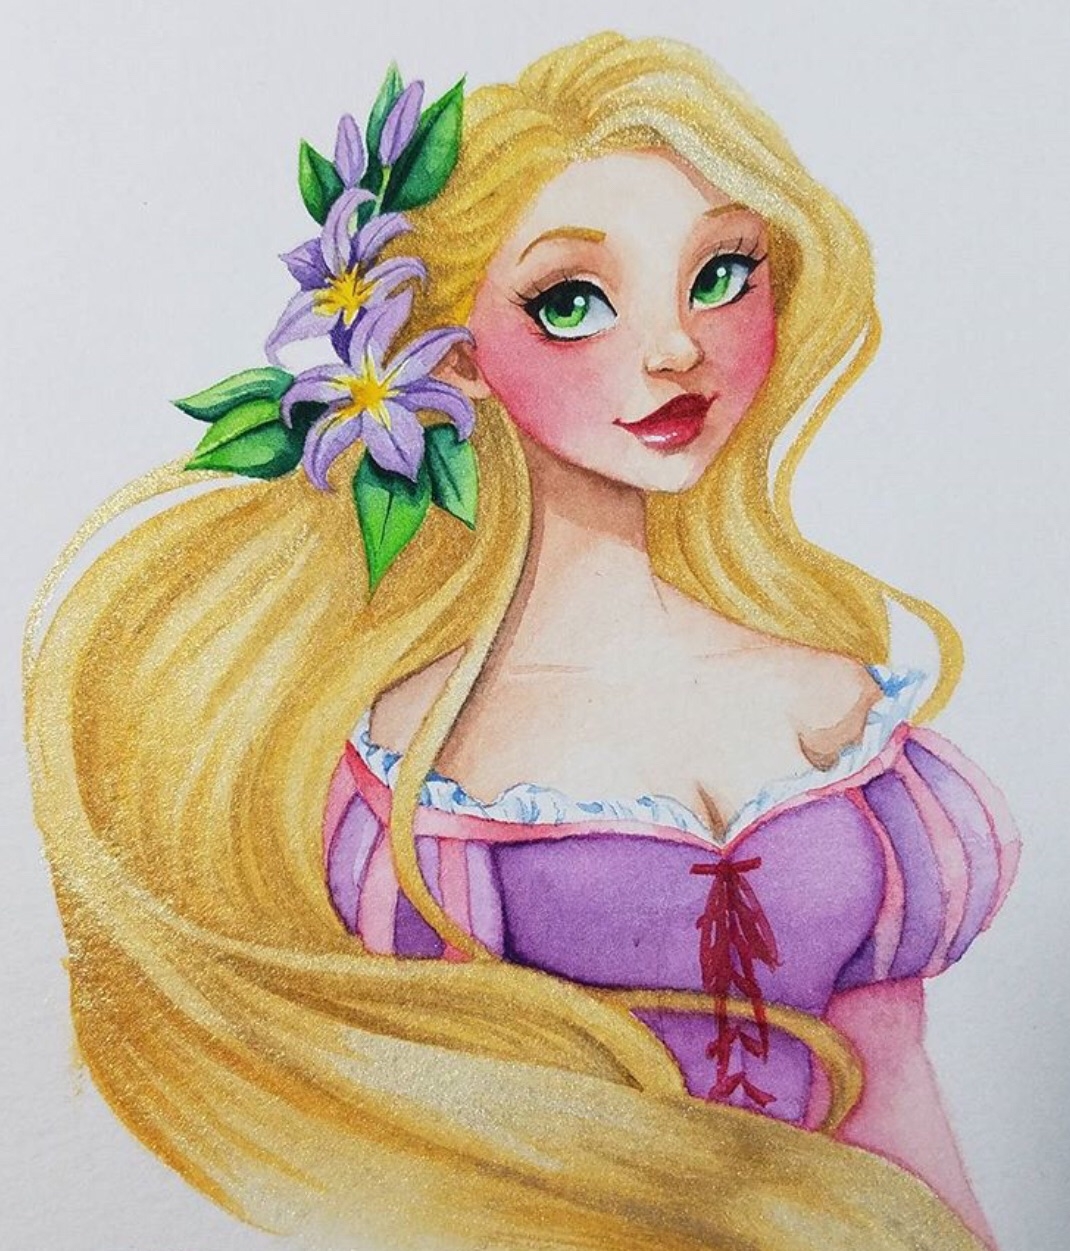 Disney Princess Rapunzel 2017